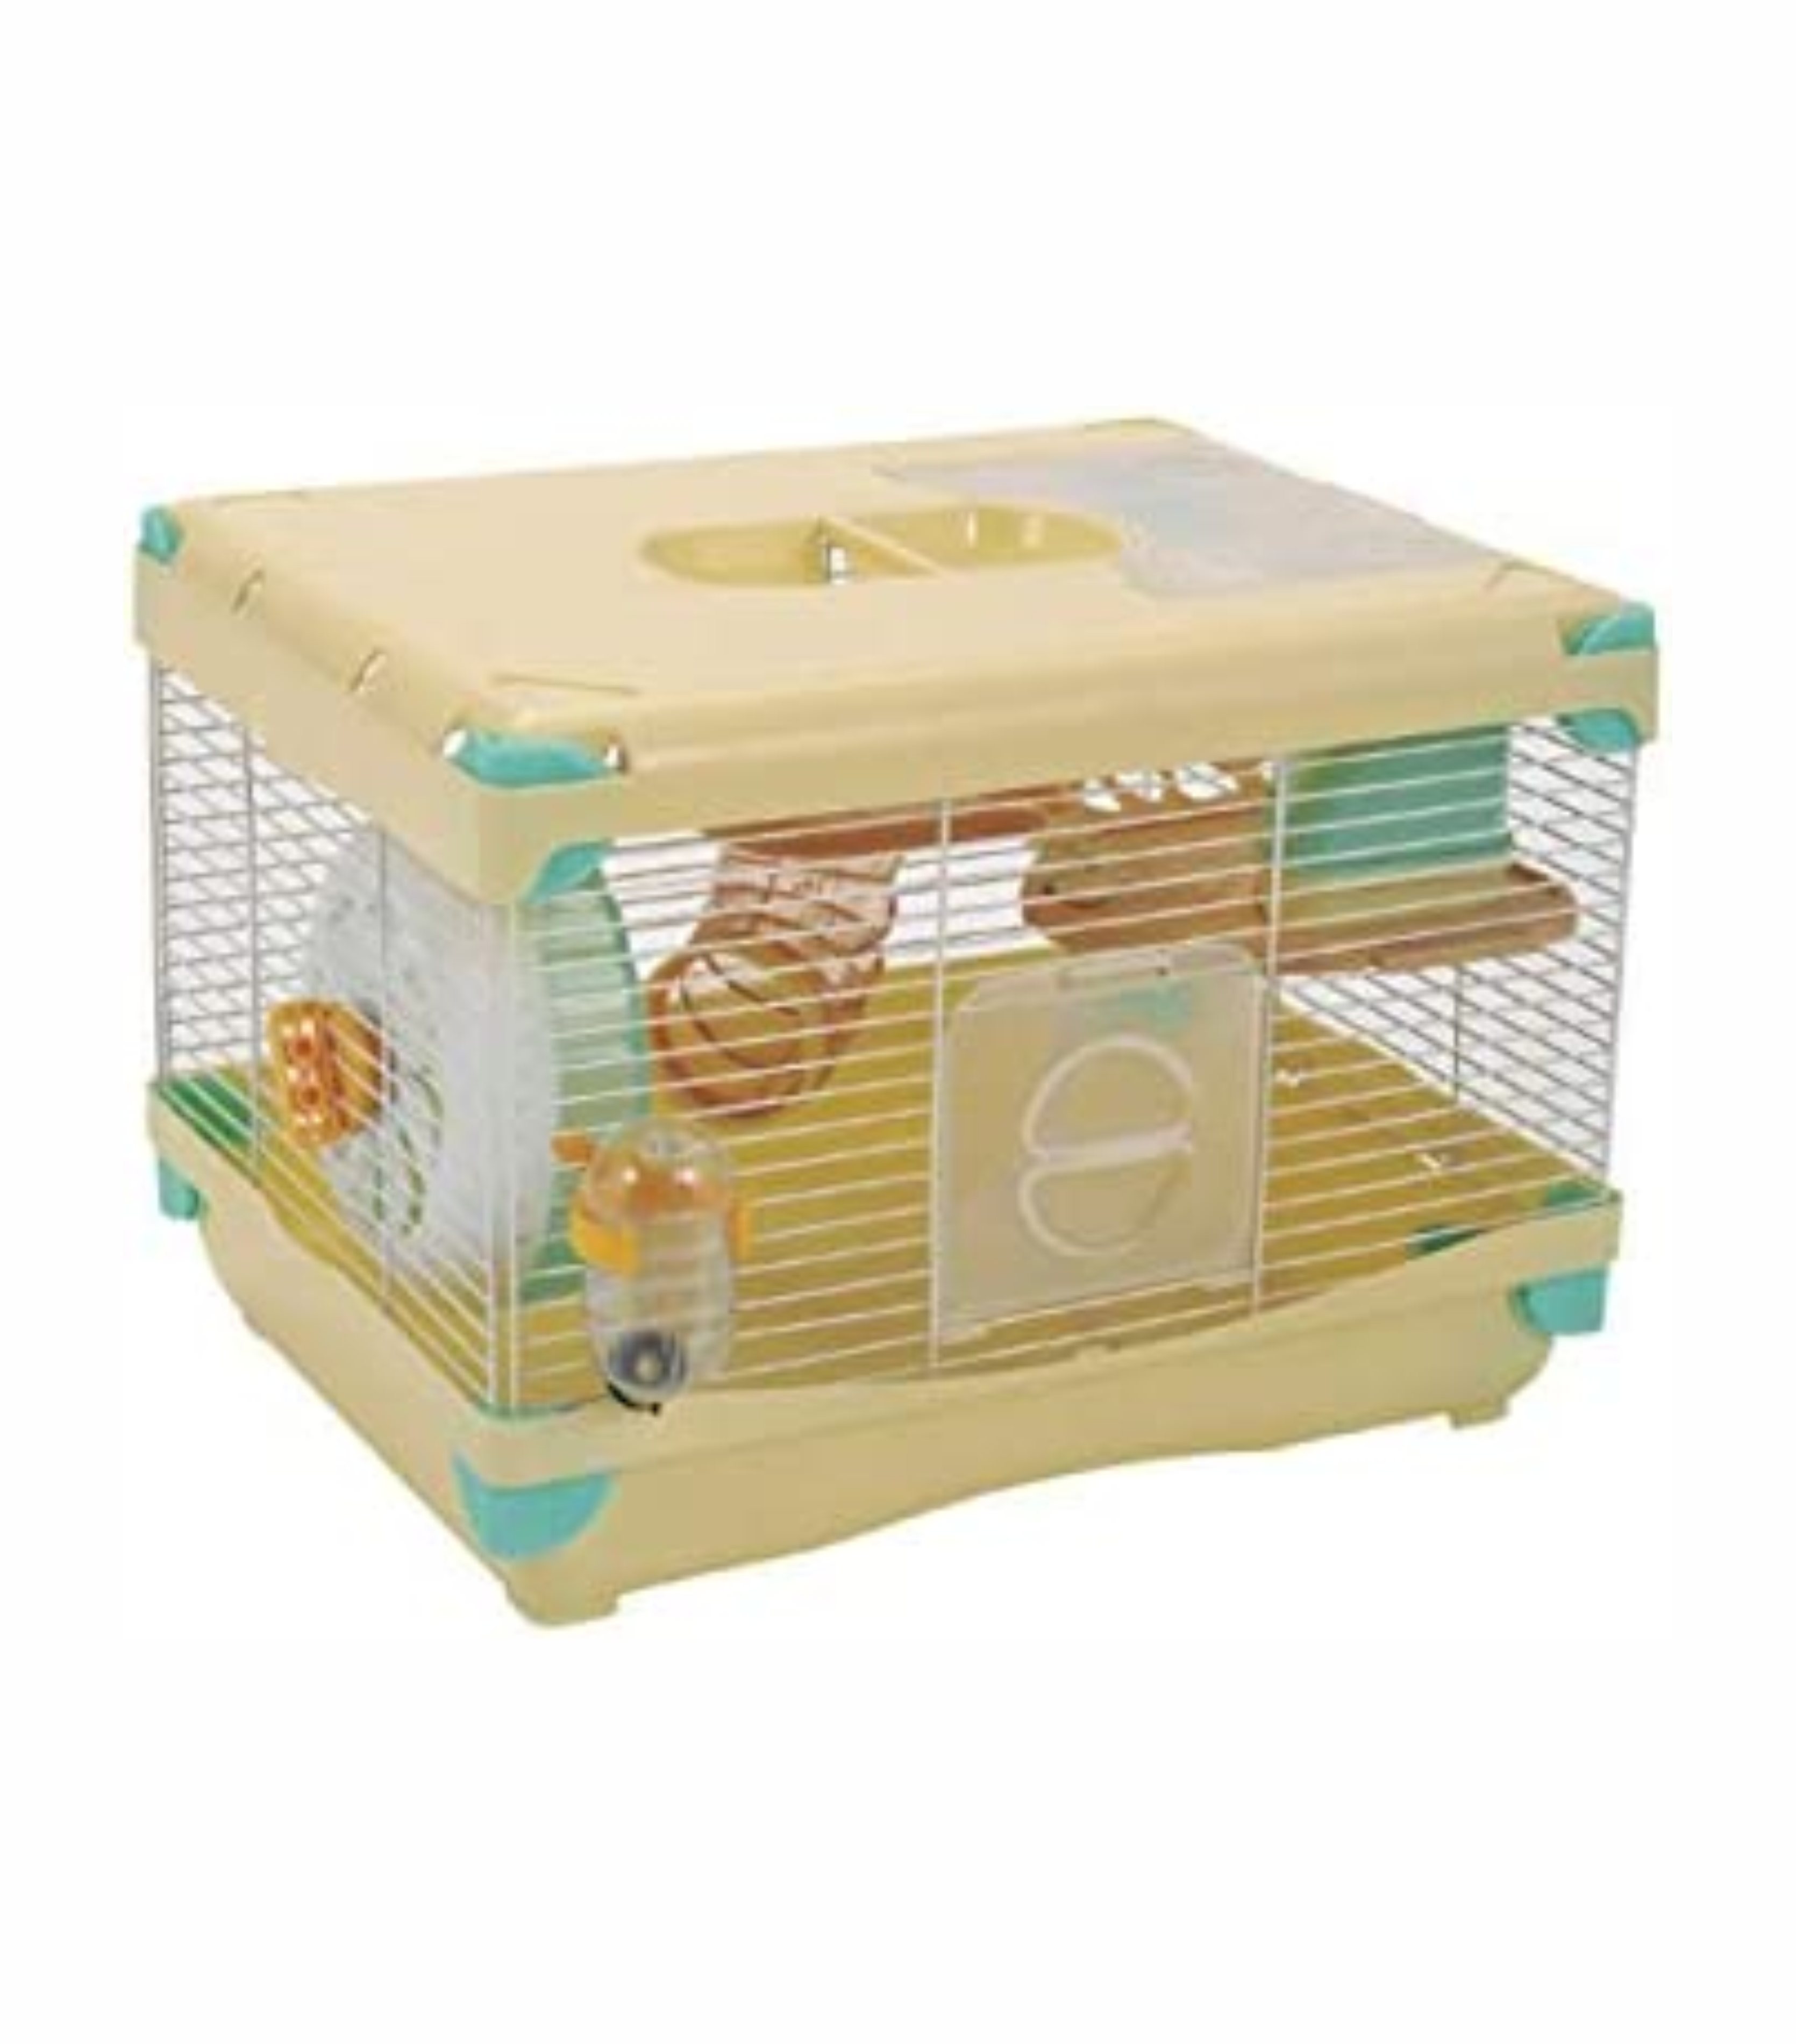 Jaula plástica para hamster Sunny (1 piso)